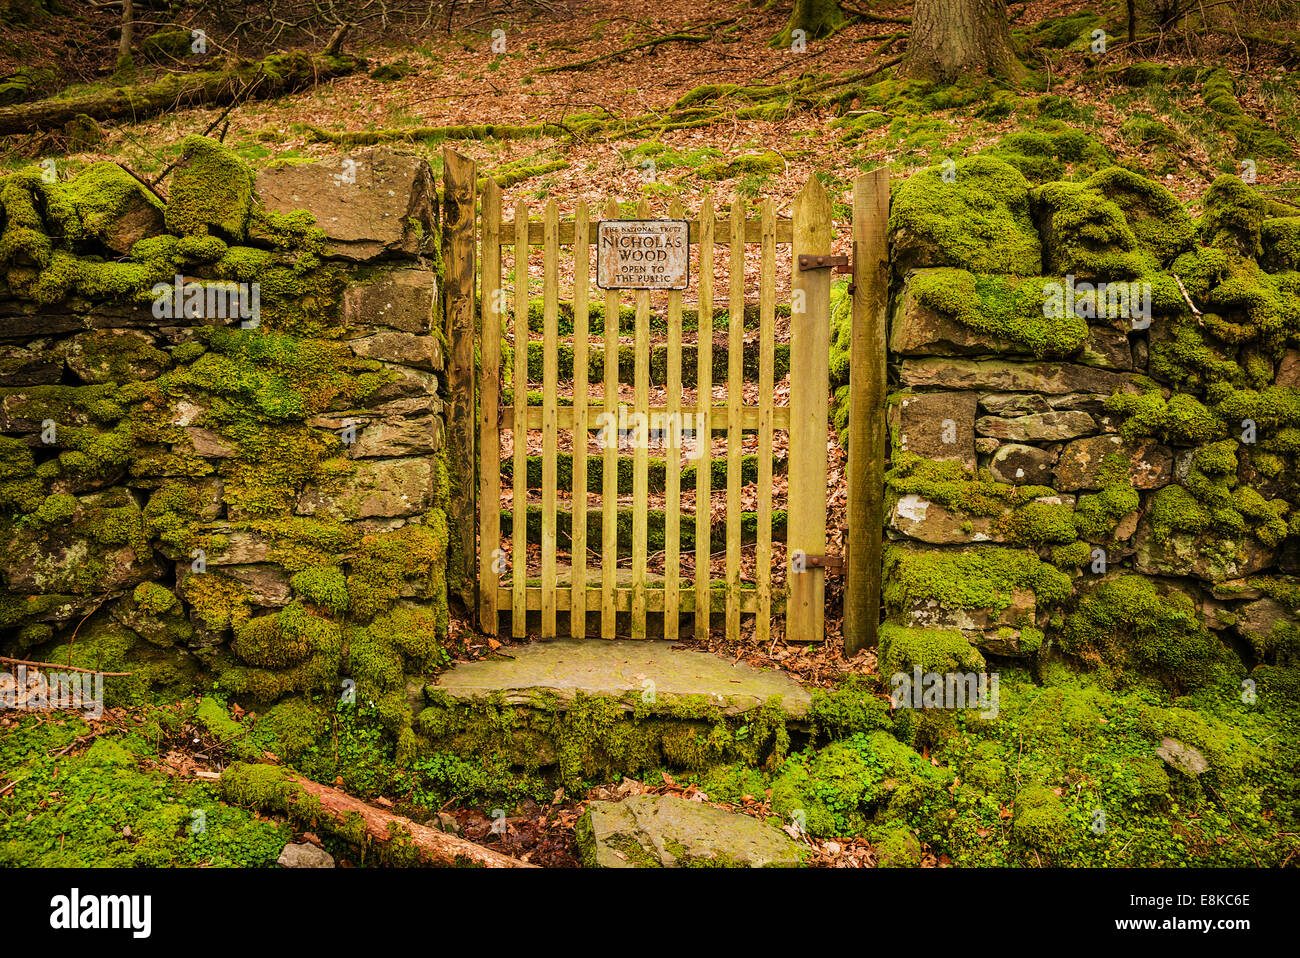 Nicholas wood gate, Grasmere, English Lake District, UK. Stock Photo